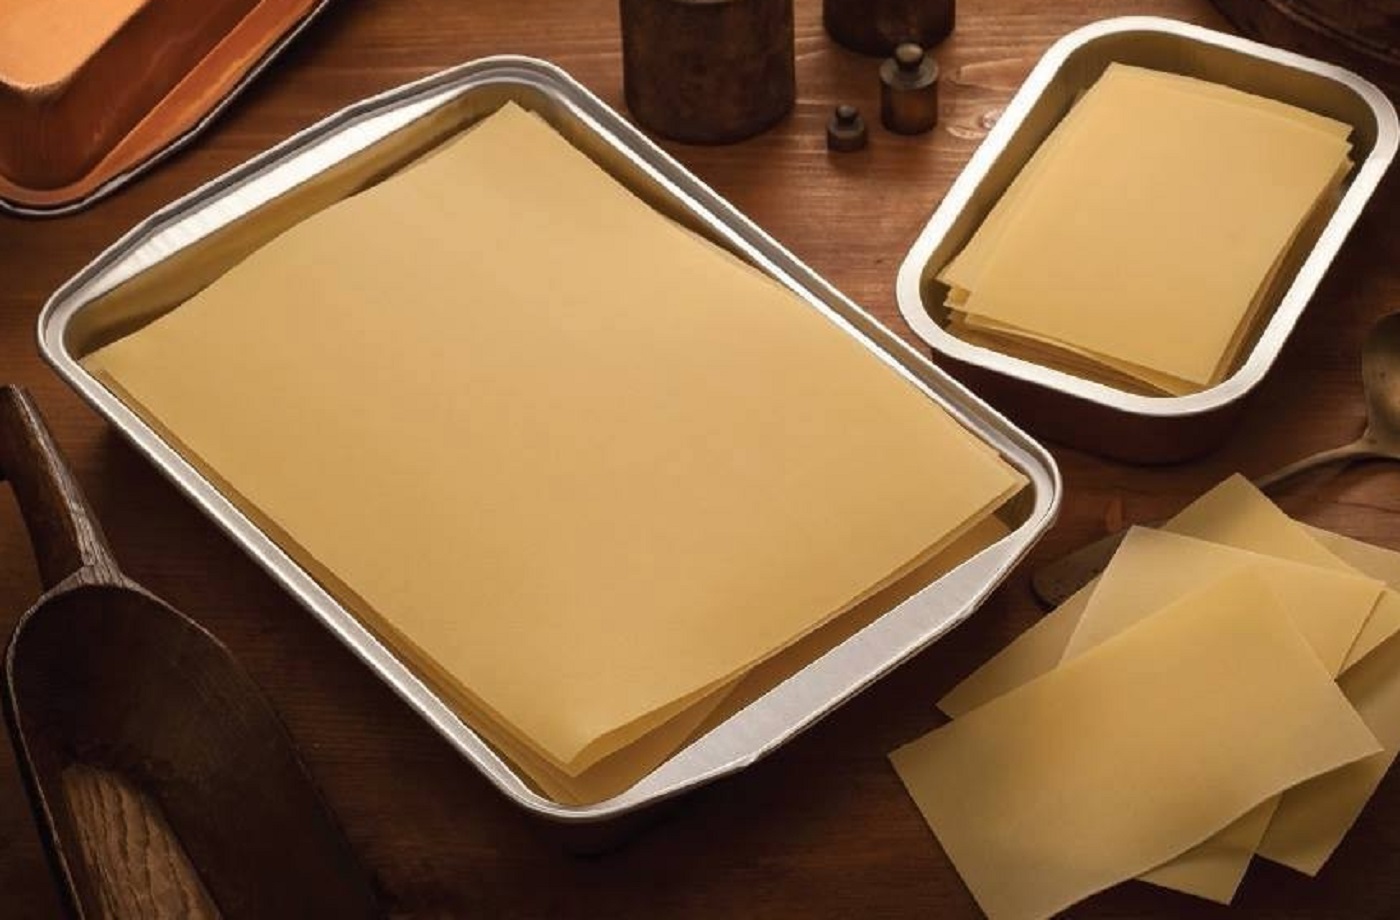 500g Familien Lasagna Nudelplatten mit Aluform Gragnano IGP 